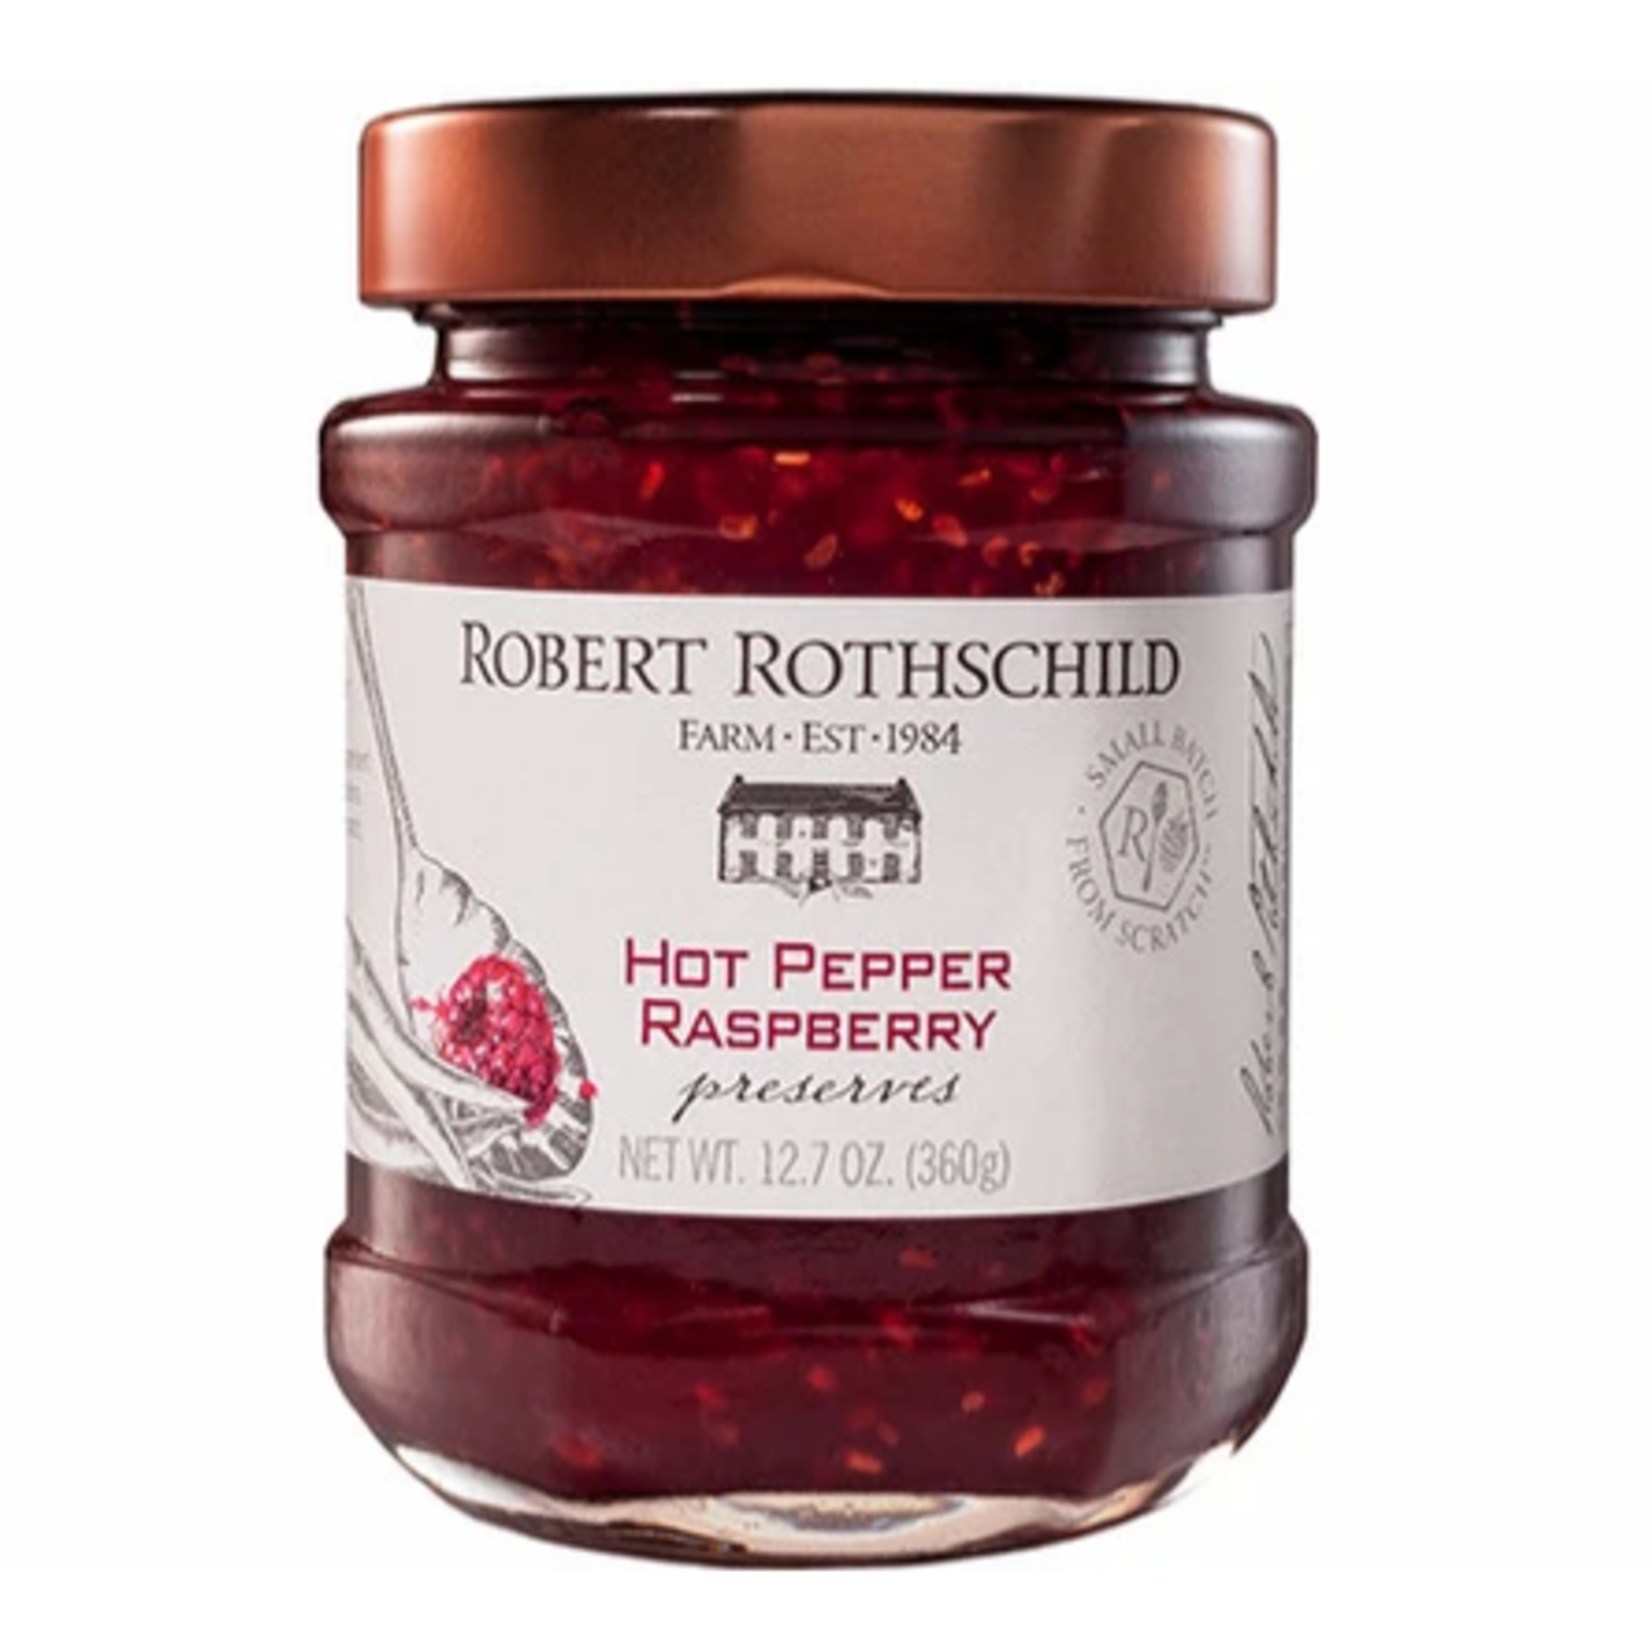 Robert Rothschild Hot Pepper Raspberry Preserves, 12.7oz